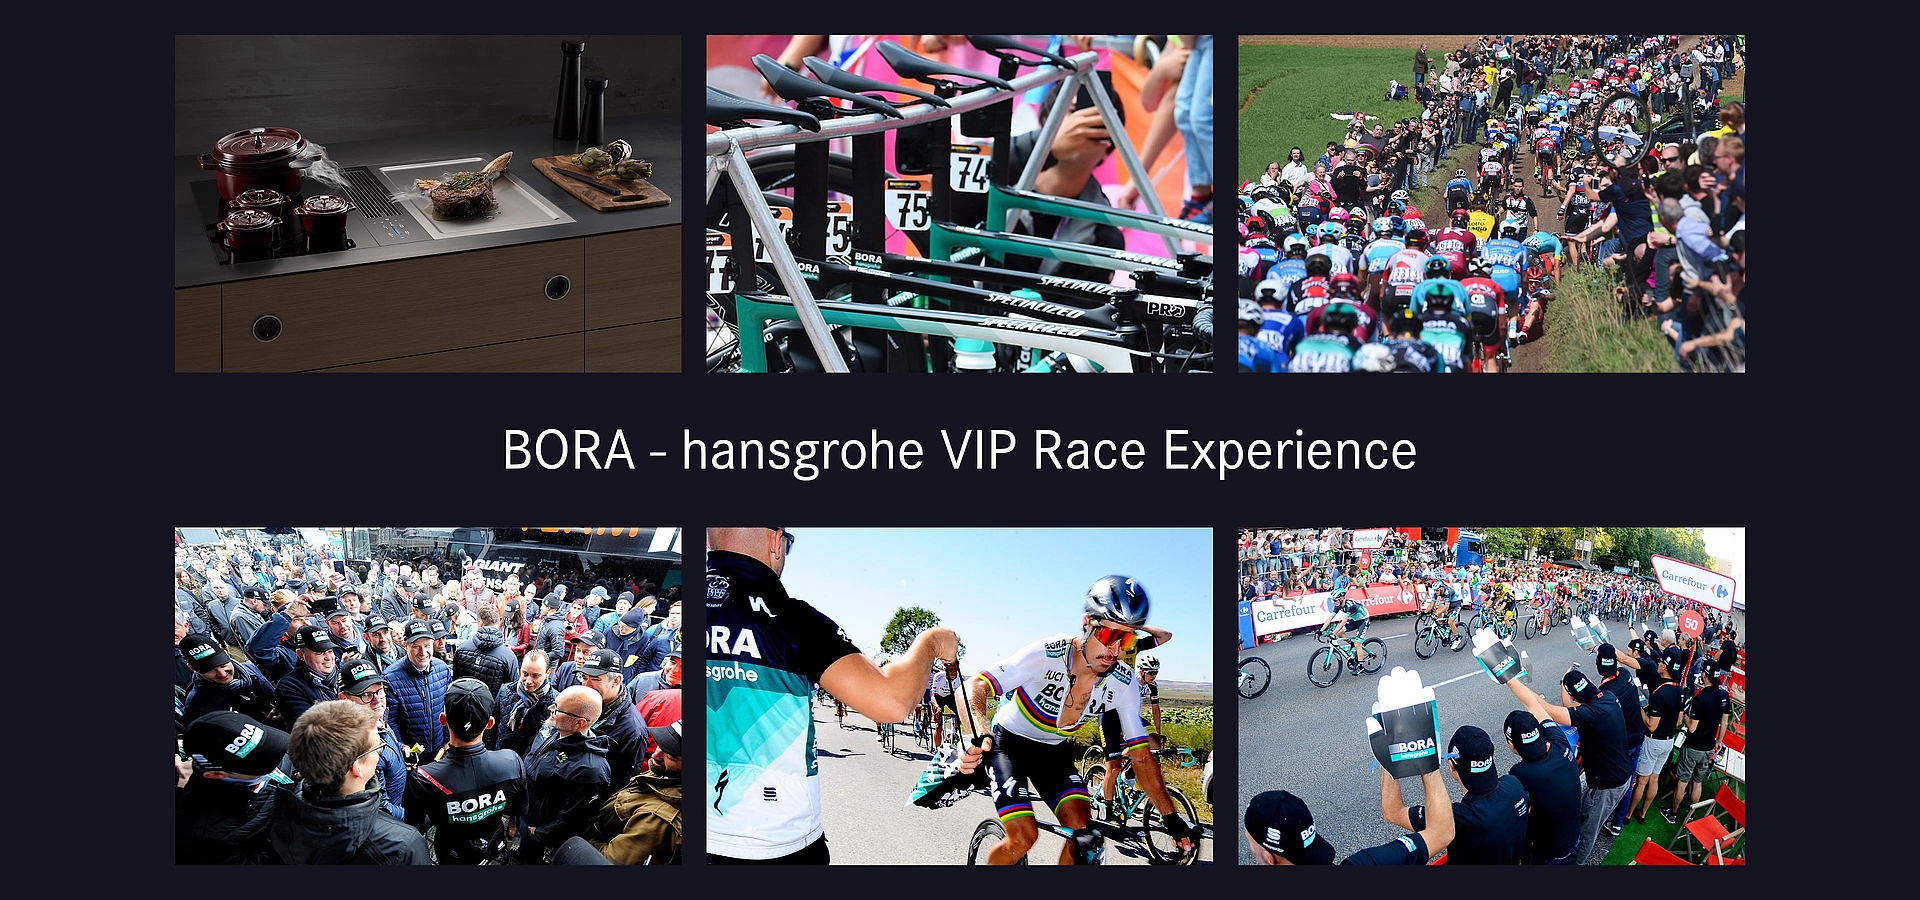 BORA_hansgrohe_VIP_Race_Experience_Headerbild_L_01.jpg